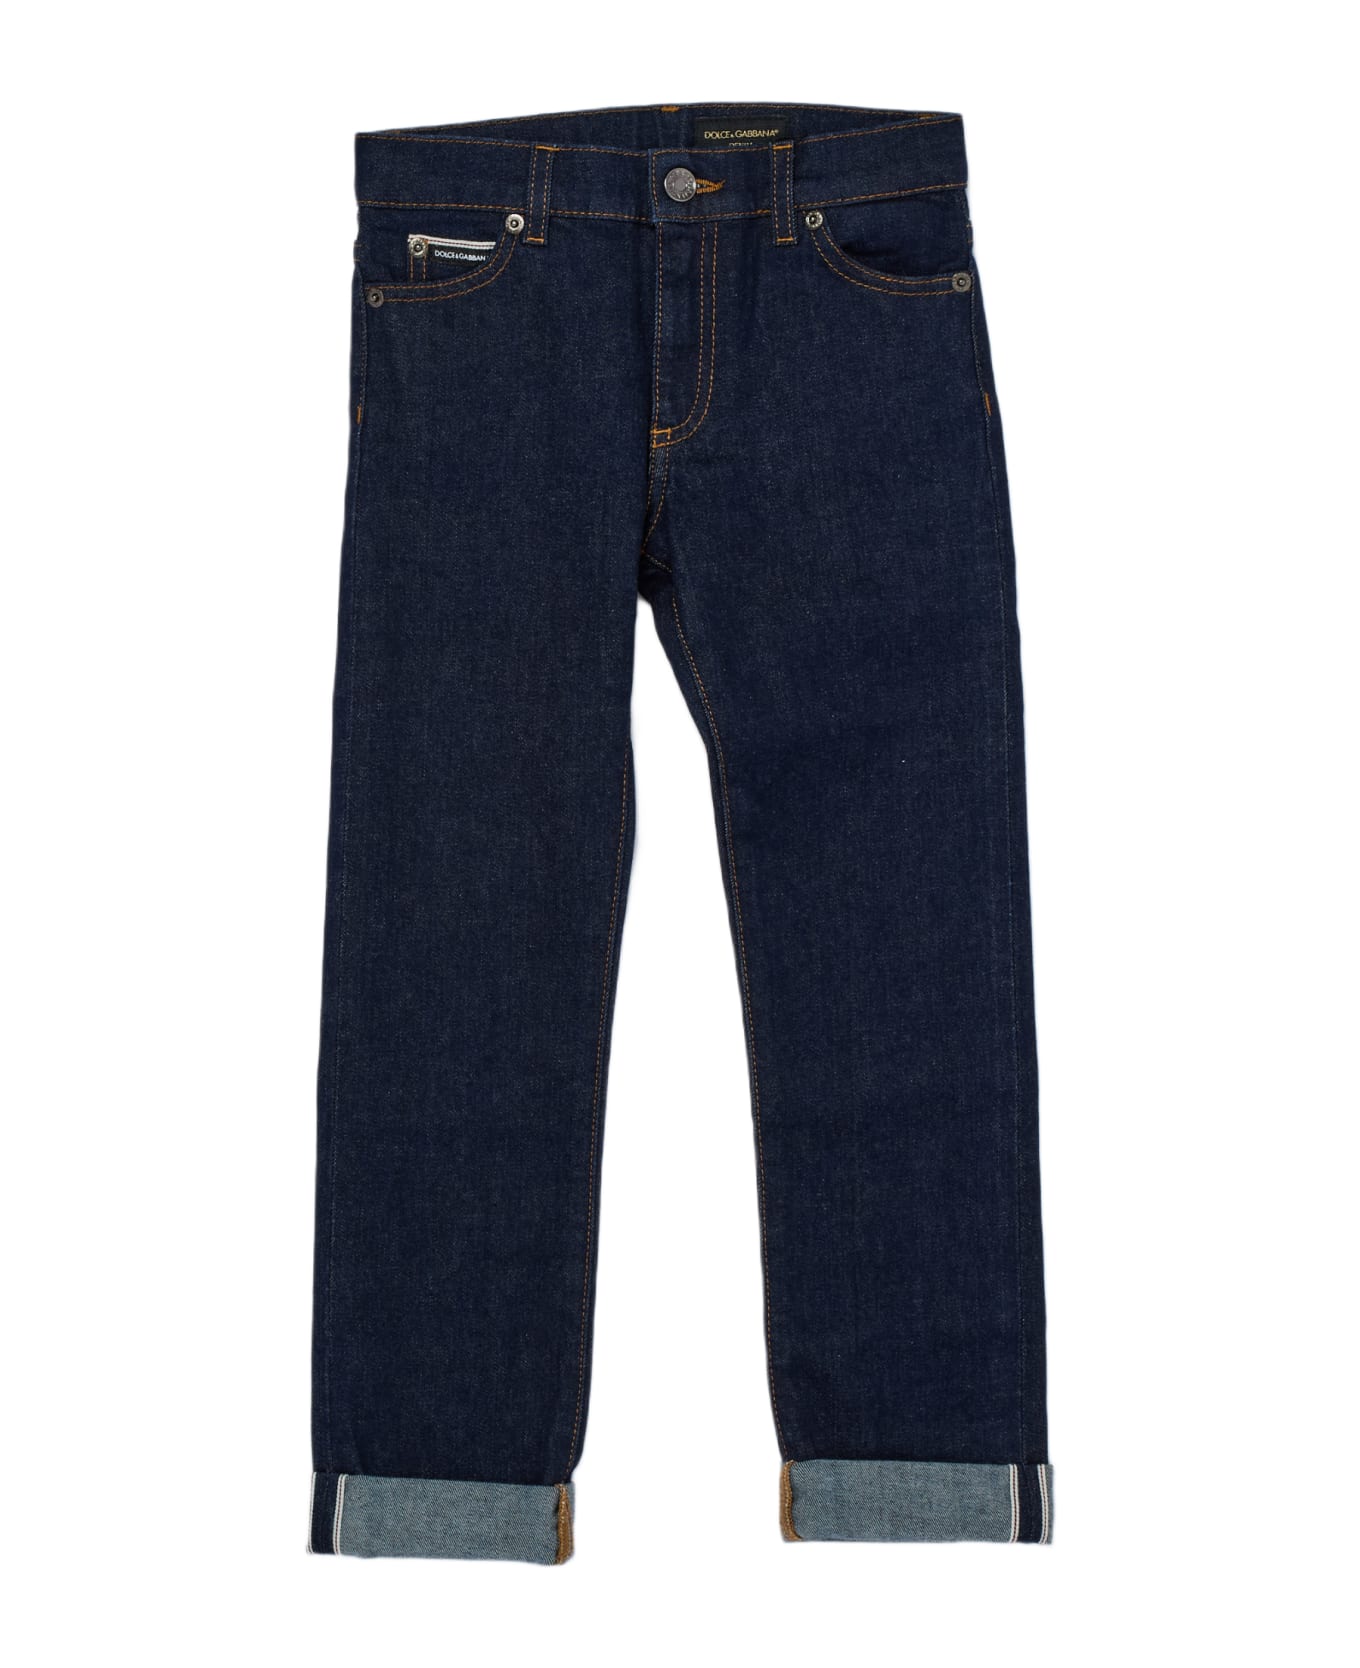 Dolce & Gabbana Jeans Jeans - DENIM SCURO